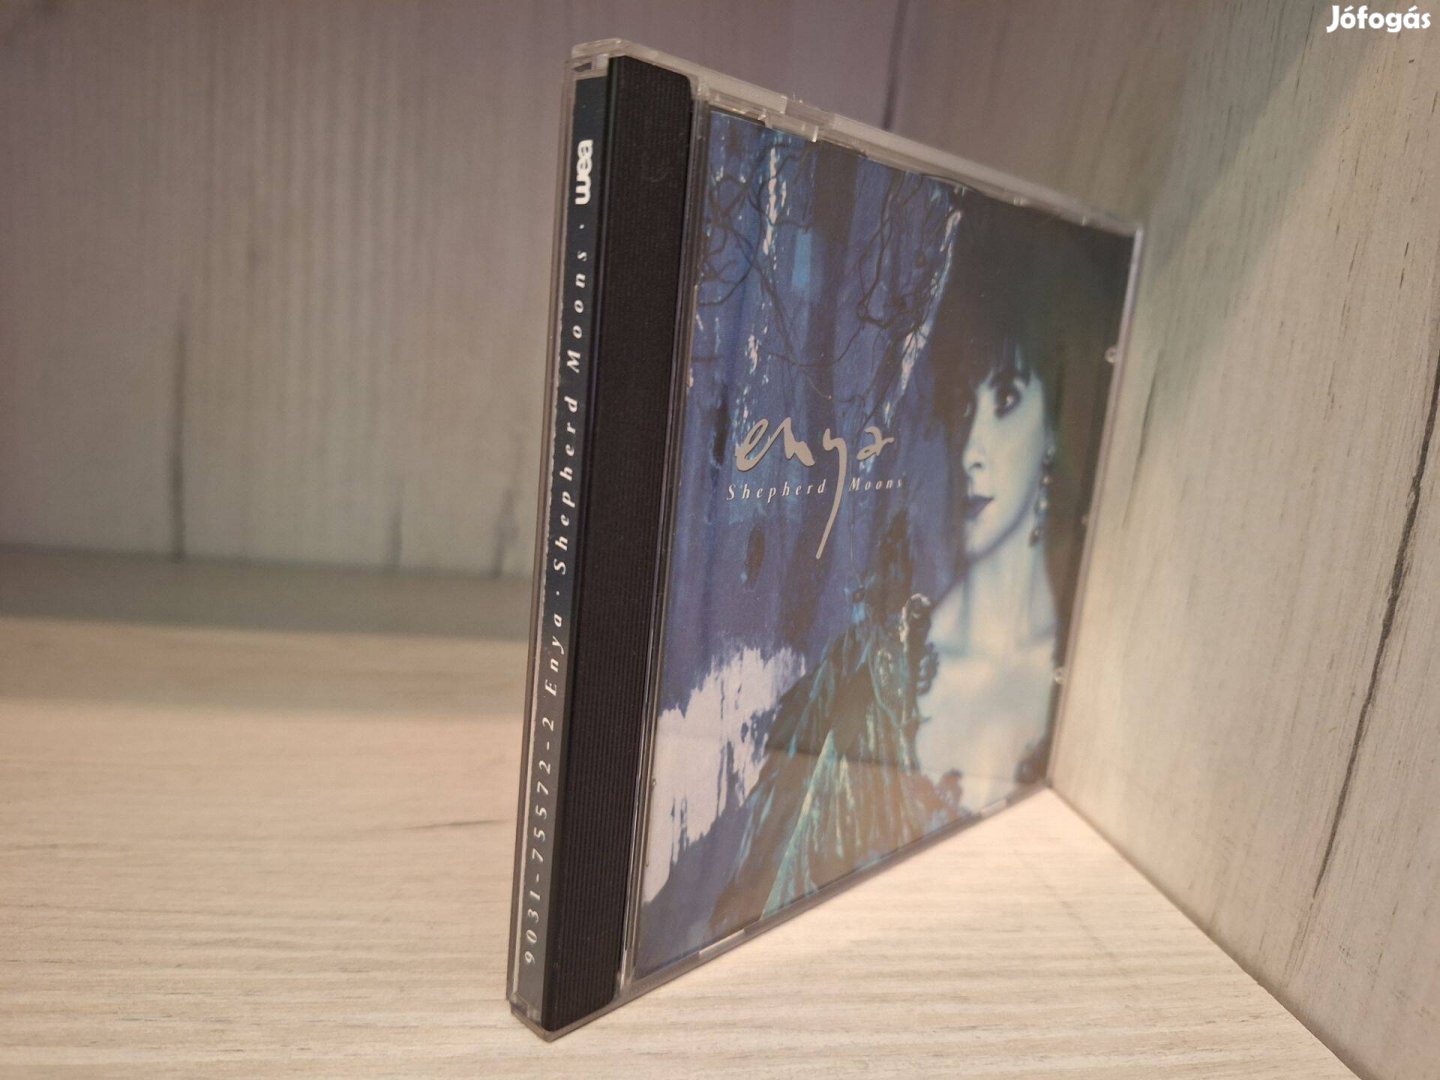 Enya - Shepherd Moons CD